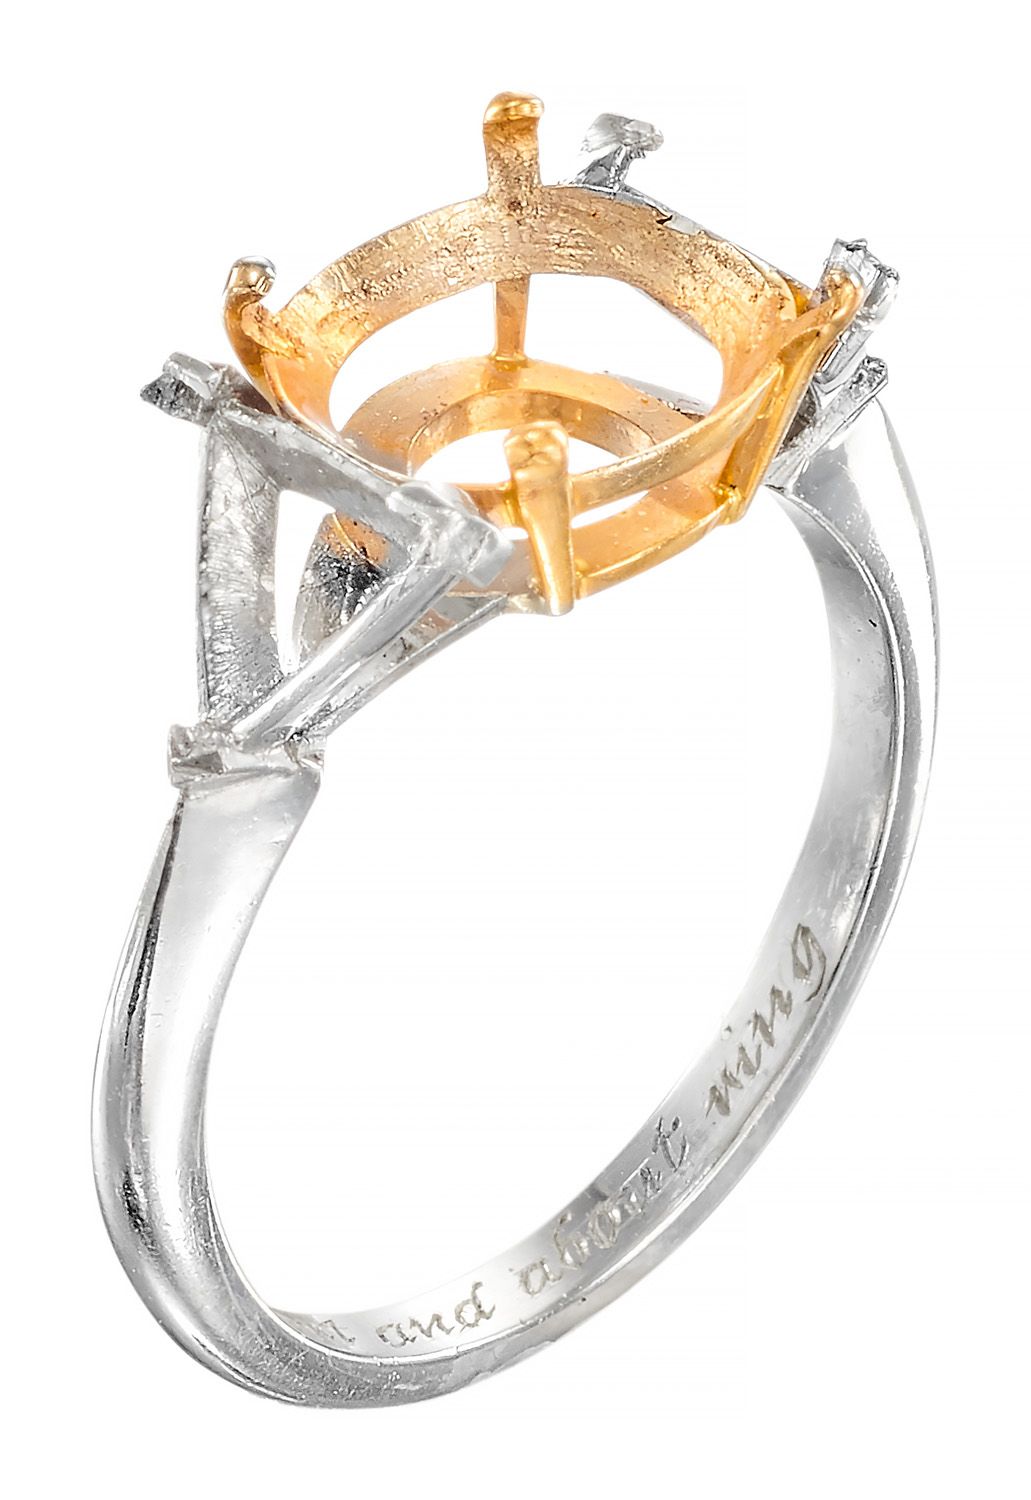 Monture 铂金和黄金材质，刻有 "我的出游戒指 "字样

TDD: 53

铅：3.70克（铂金-850/1000和黄金18K-750/1000）。